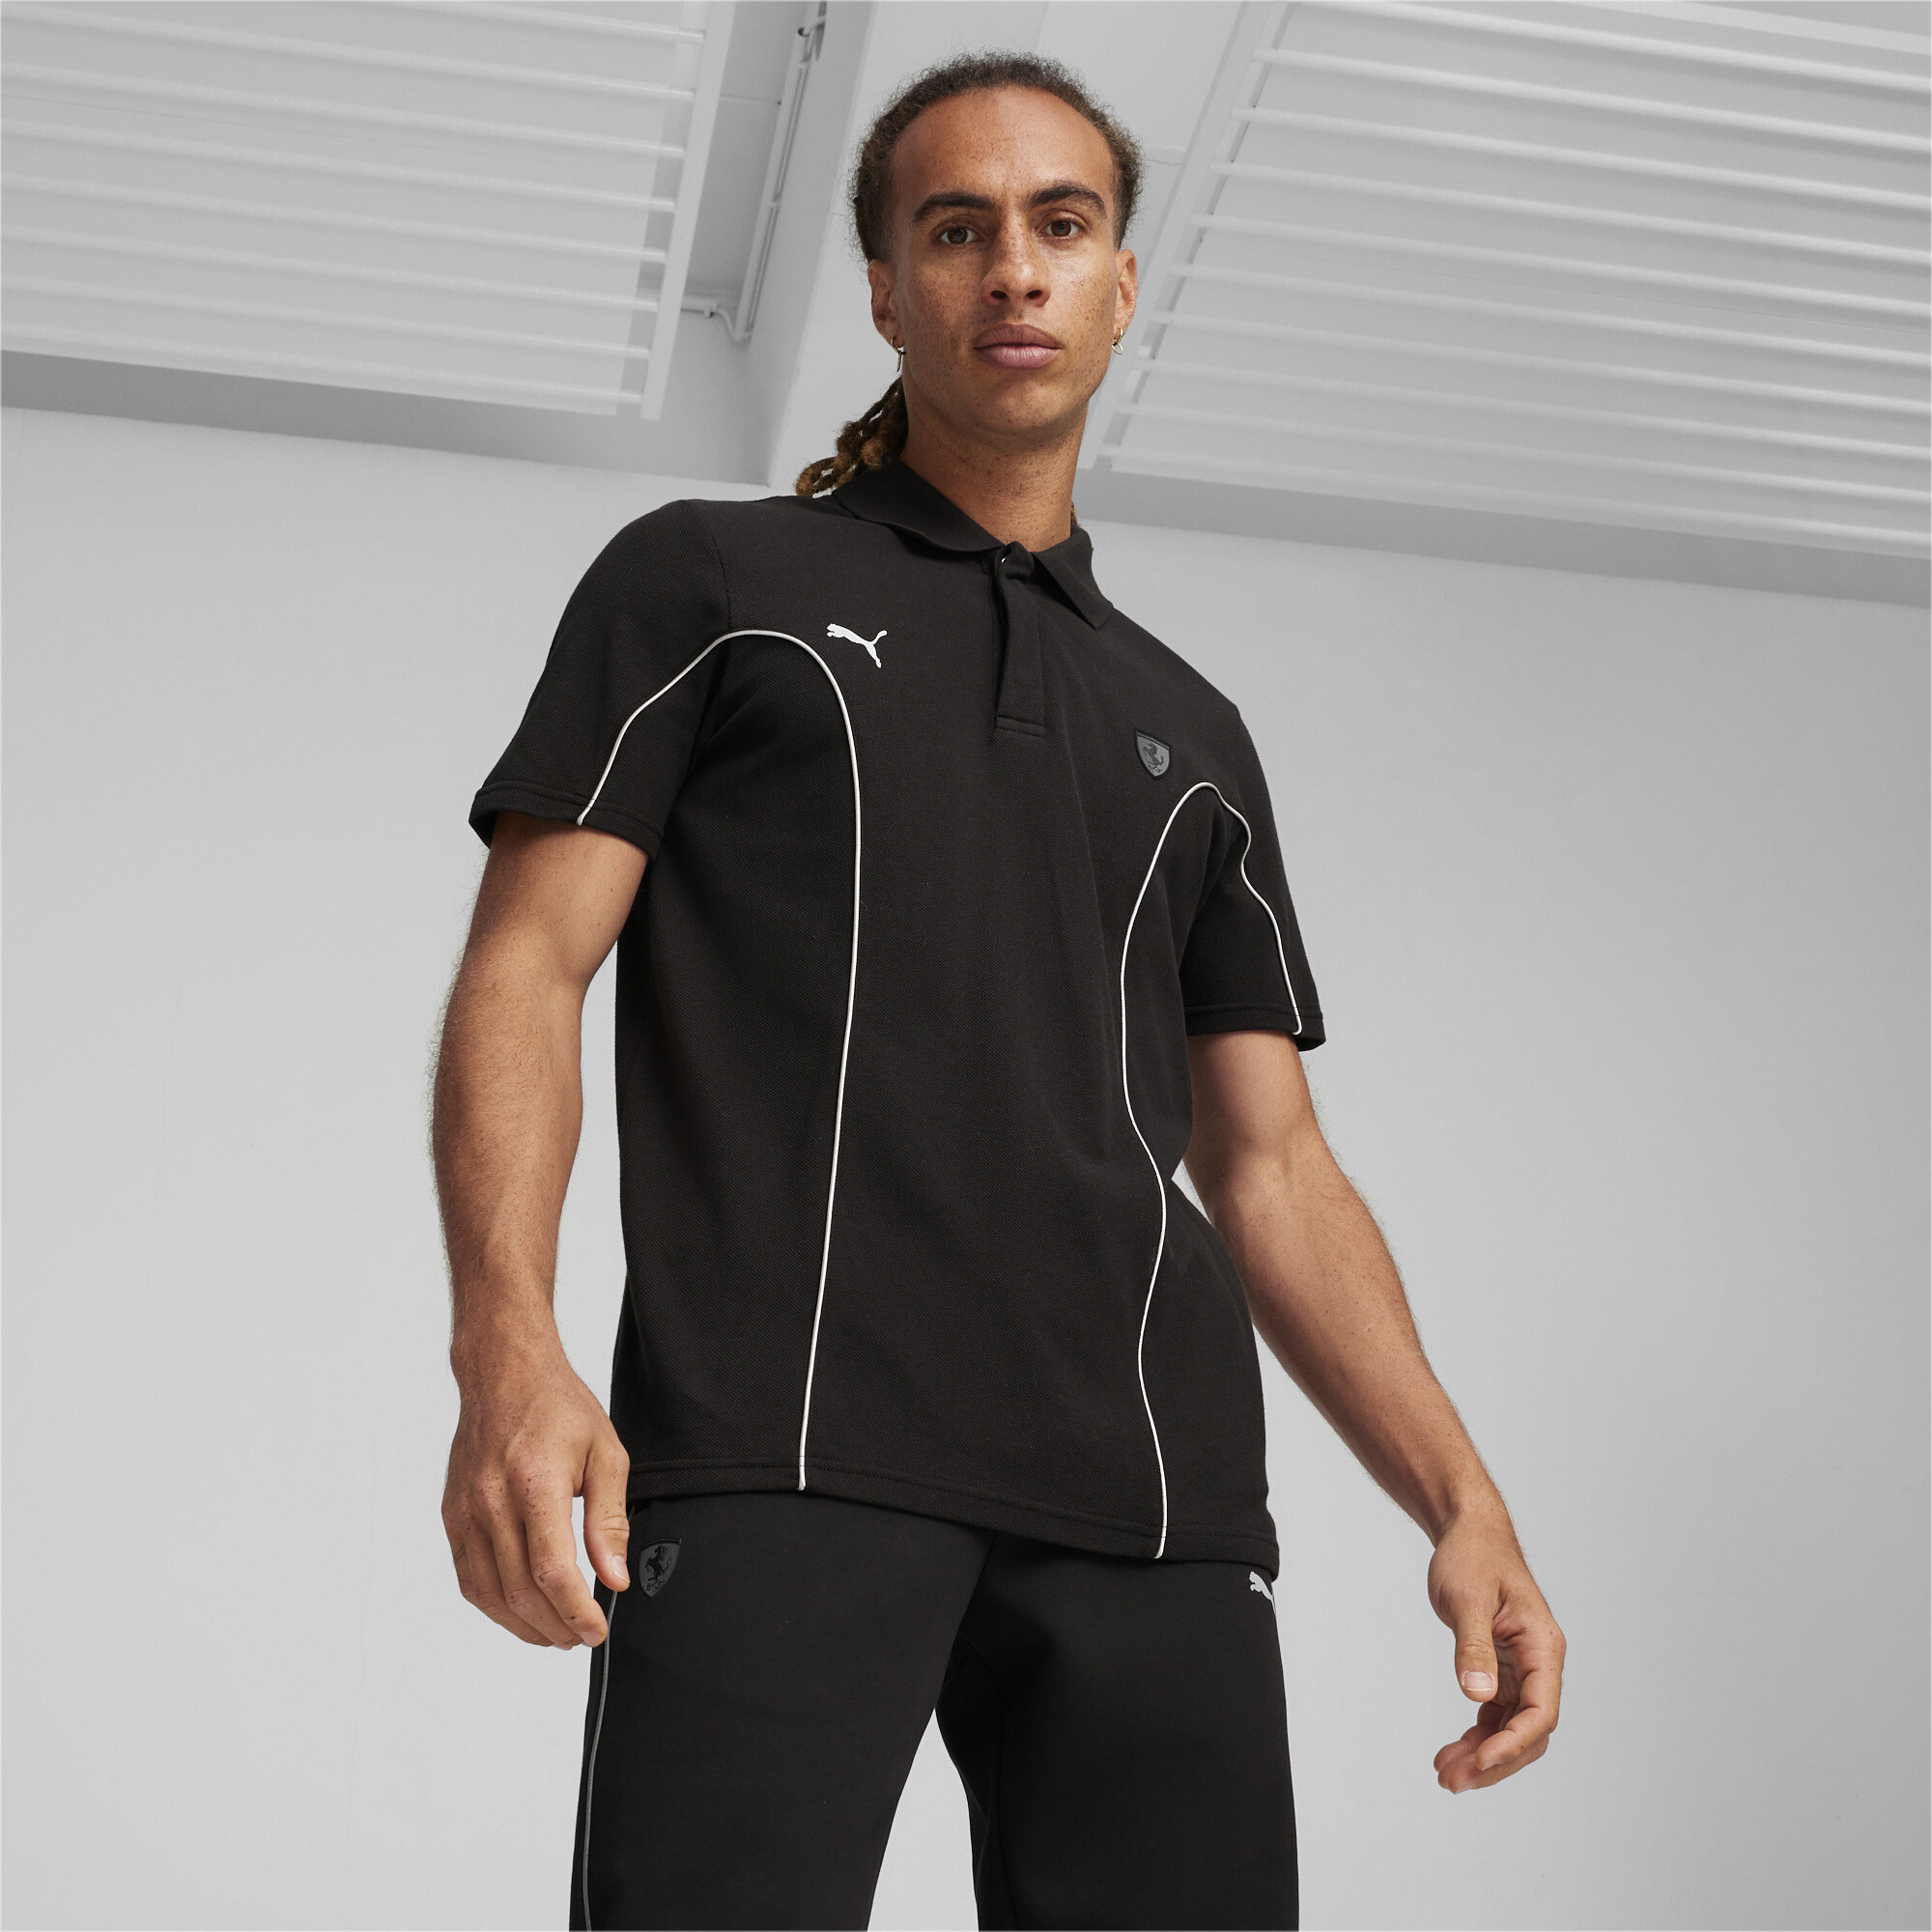 Men's Puma Scuderia Ferrari Style's Motorsport Polo T-Shirt, Black T-Shirt, Size XL T-Shirt, Clothing